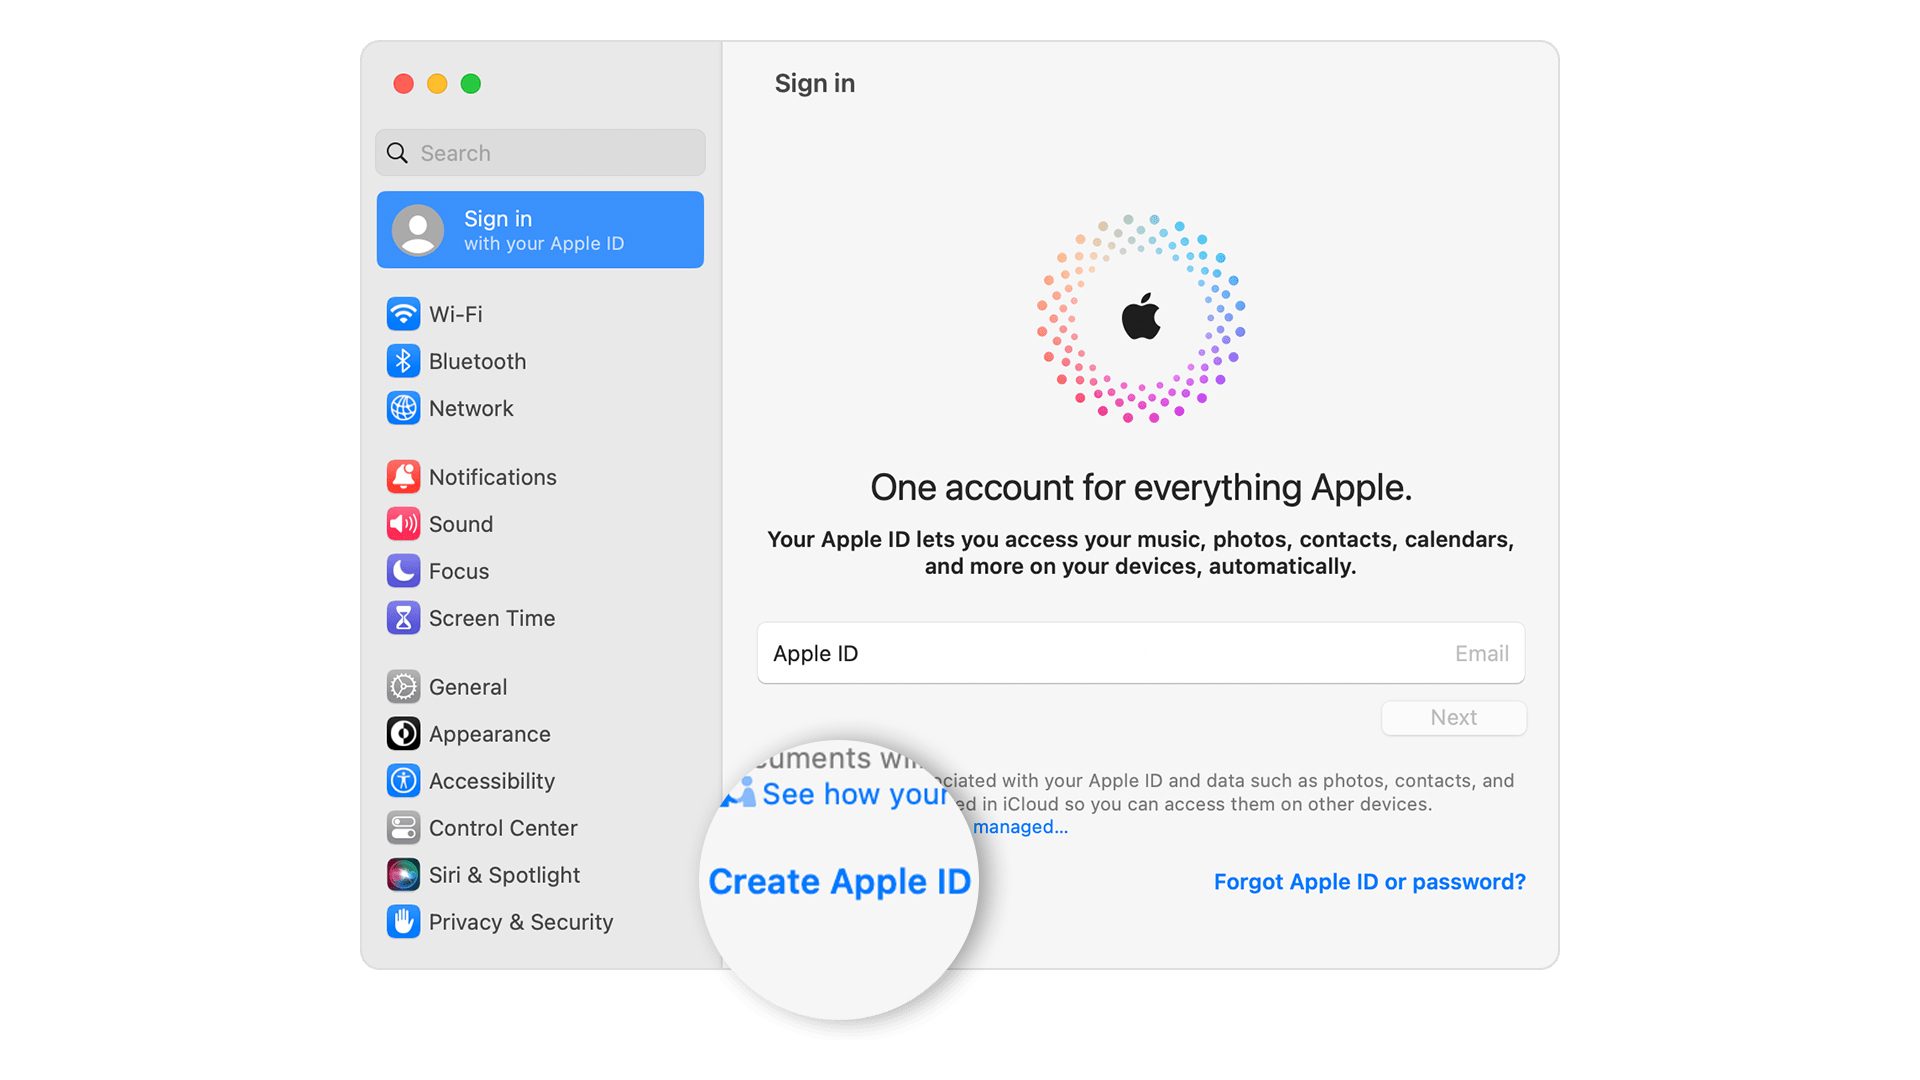 Creating an Apple ID on Mac